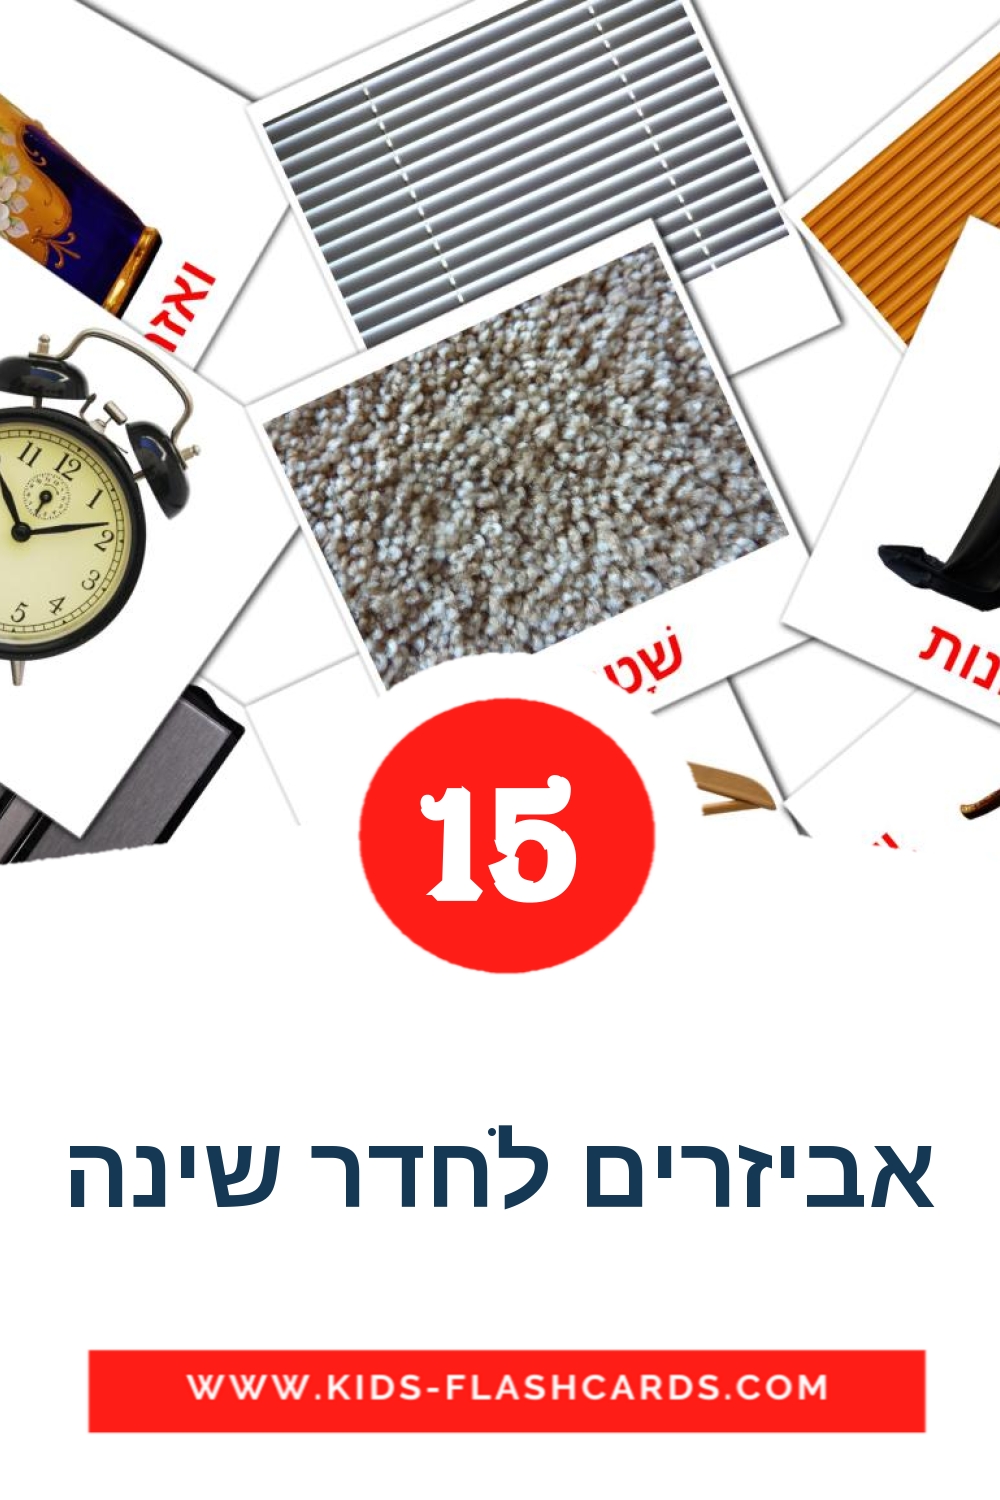 15 carte illustrate di אביזרים לחדר שינה per la scuola materna in ebraico